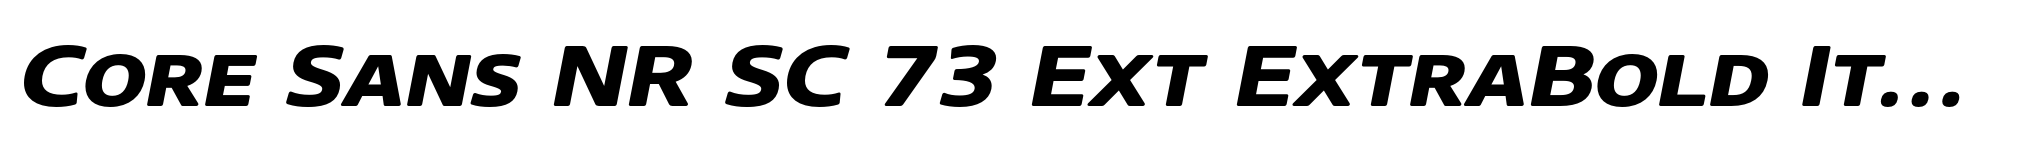 Core Sans NR SC 73 Ext ExtraBold Italic image